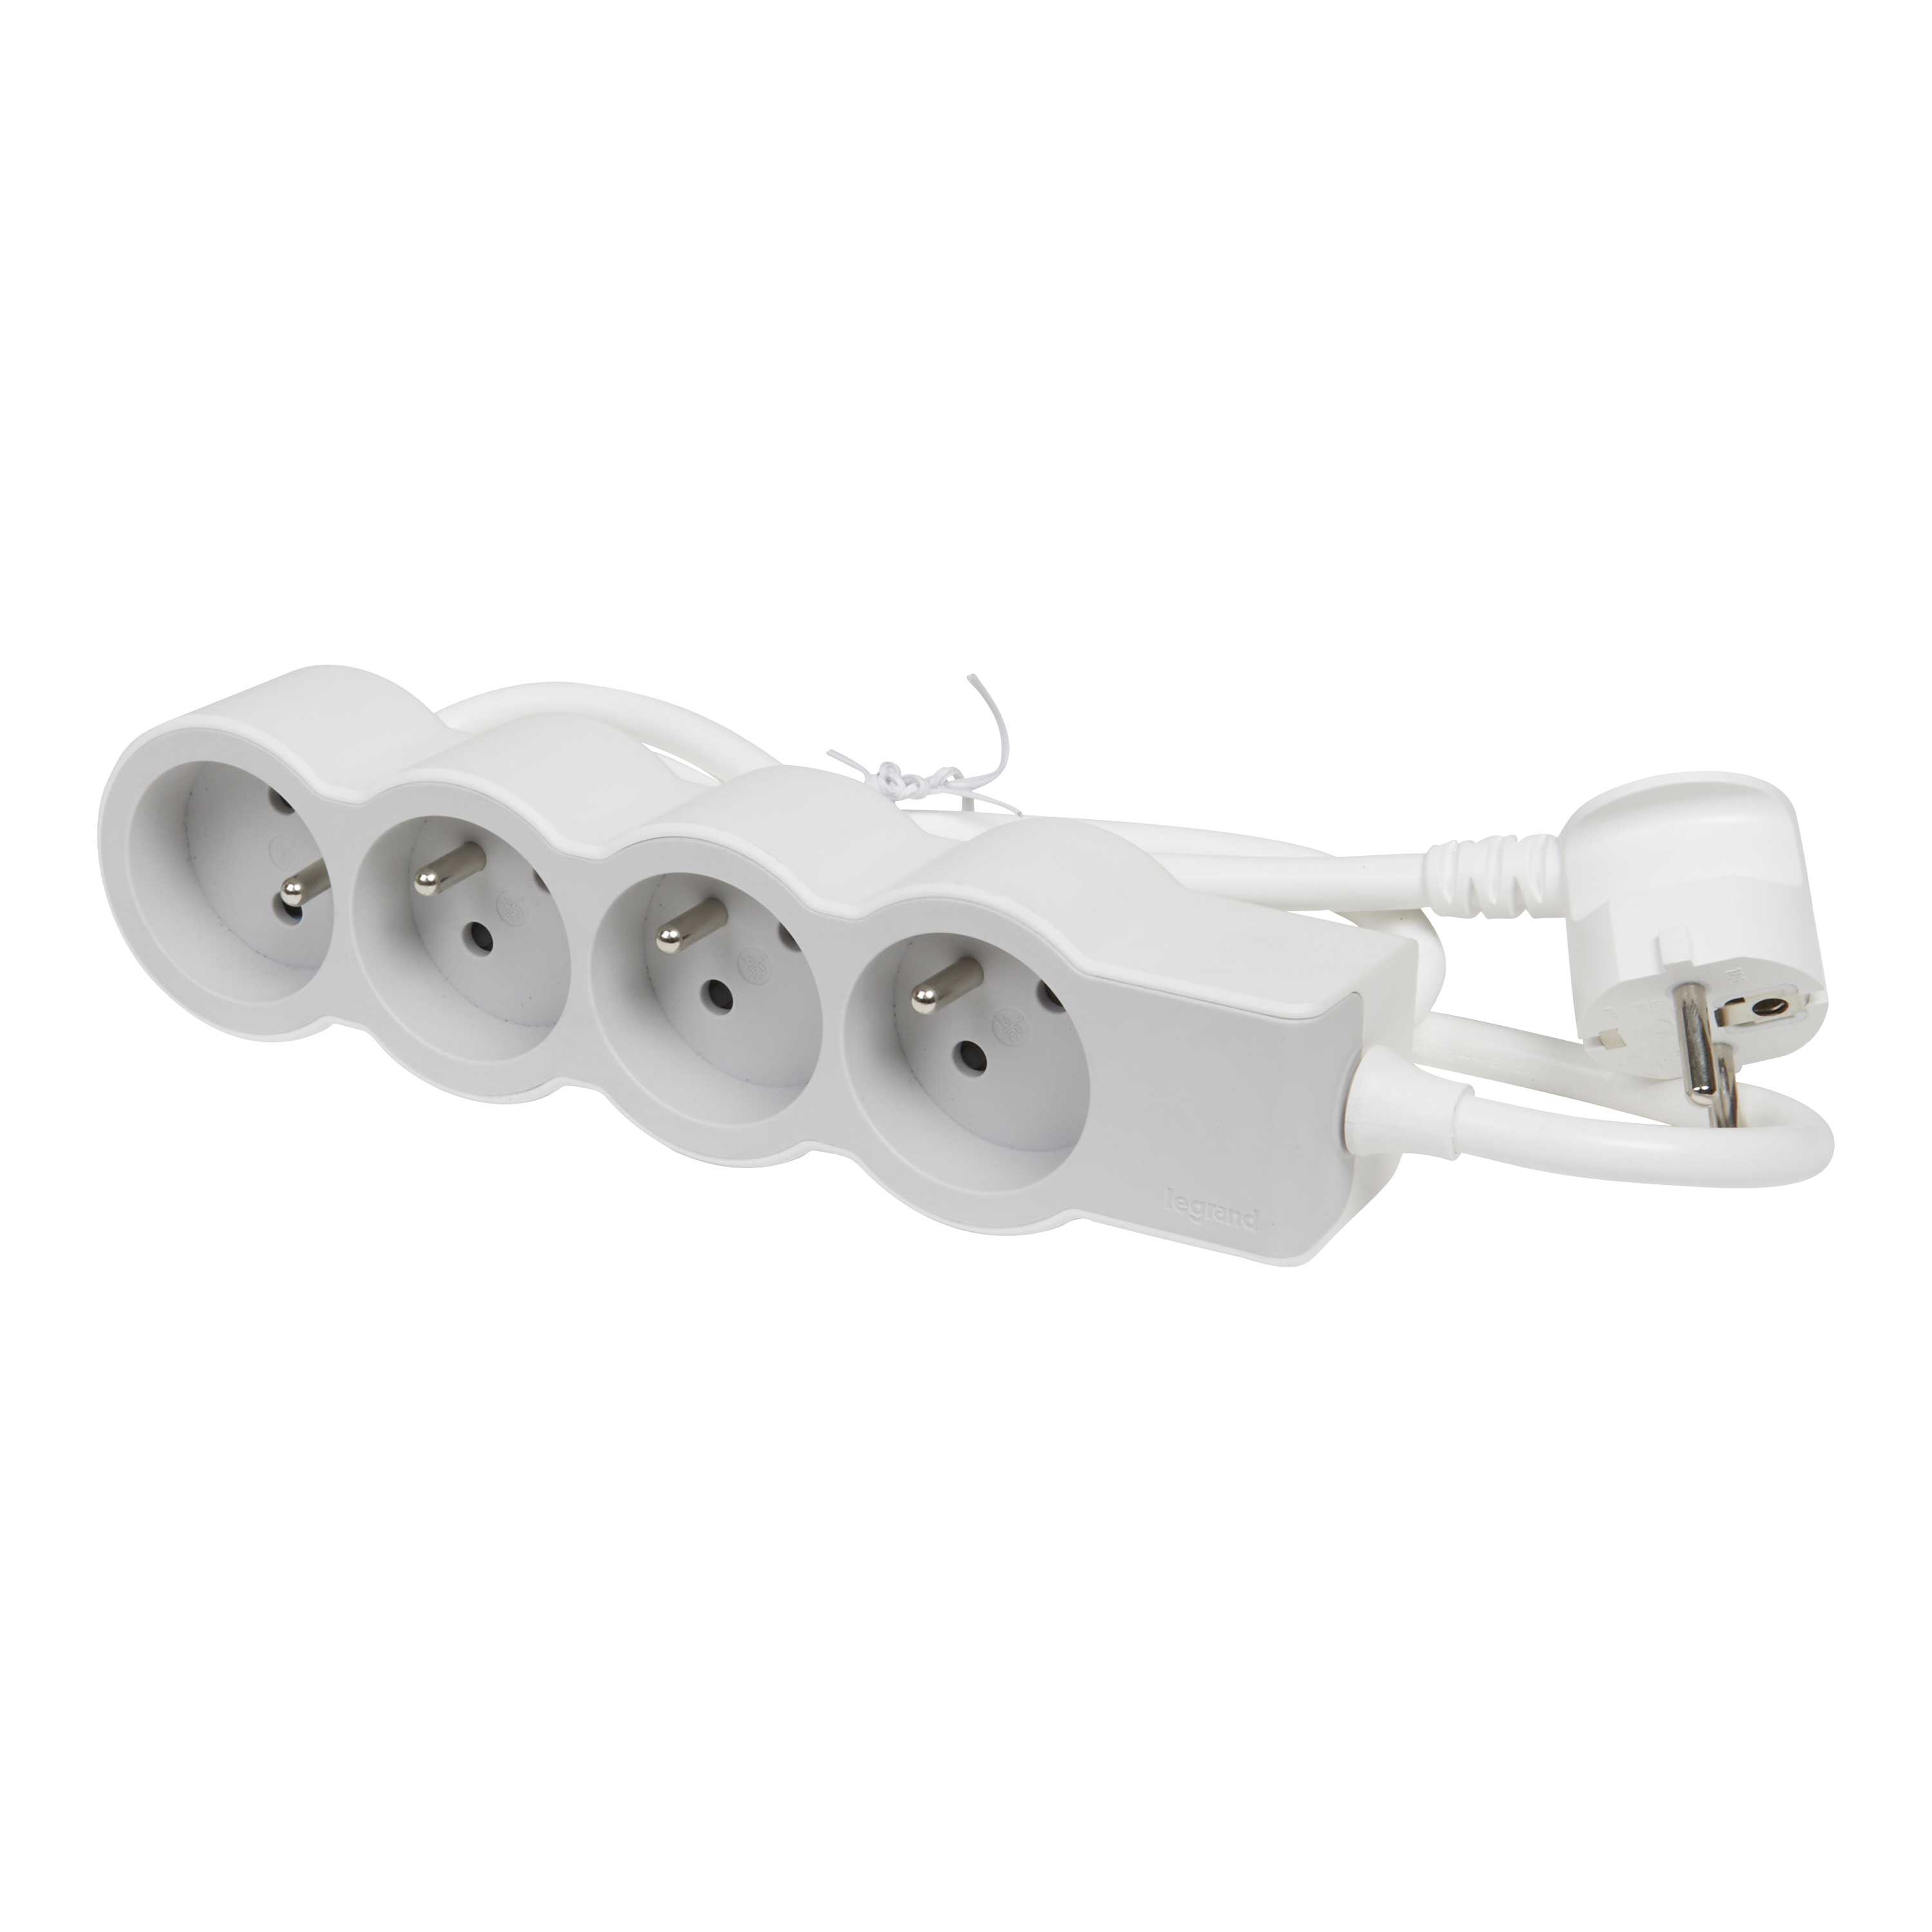 Rallonge multiprise LEGRAND 4 prises + 2 ports USB - Bricoland Maroc